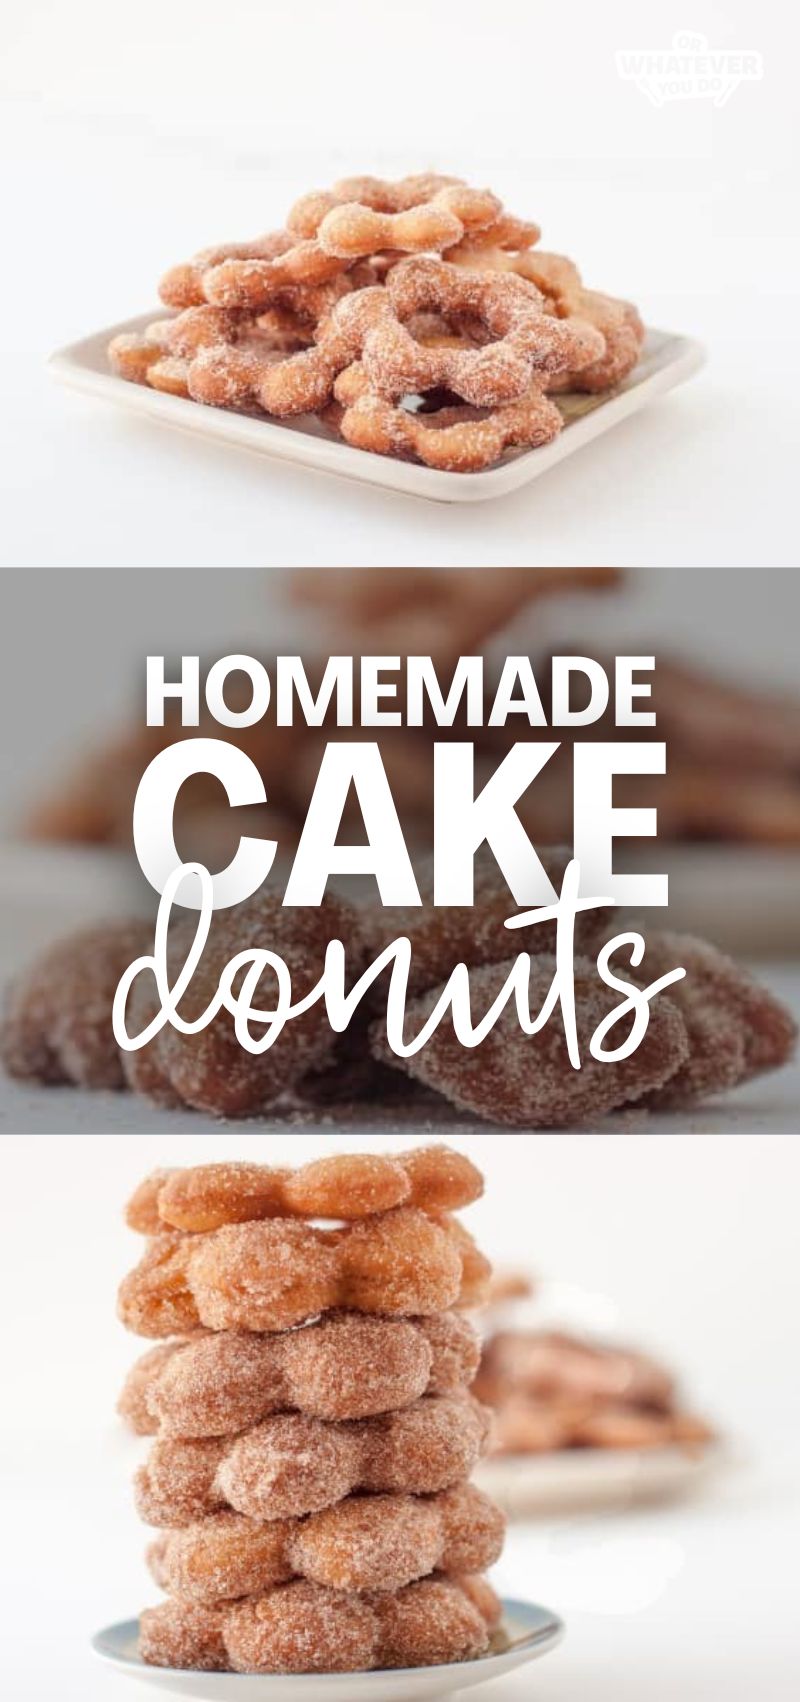 Cake Donuts